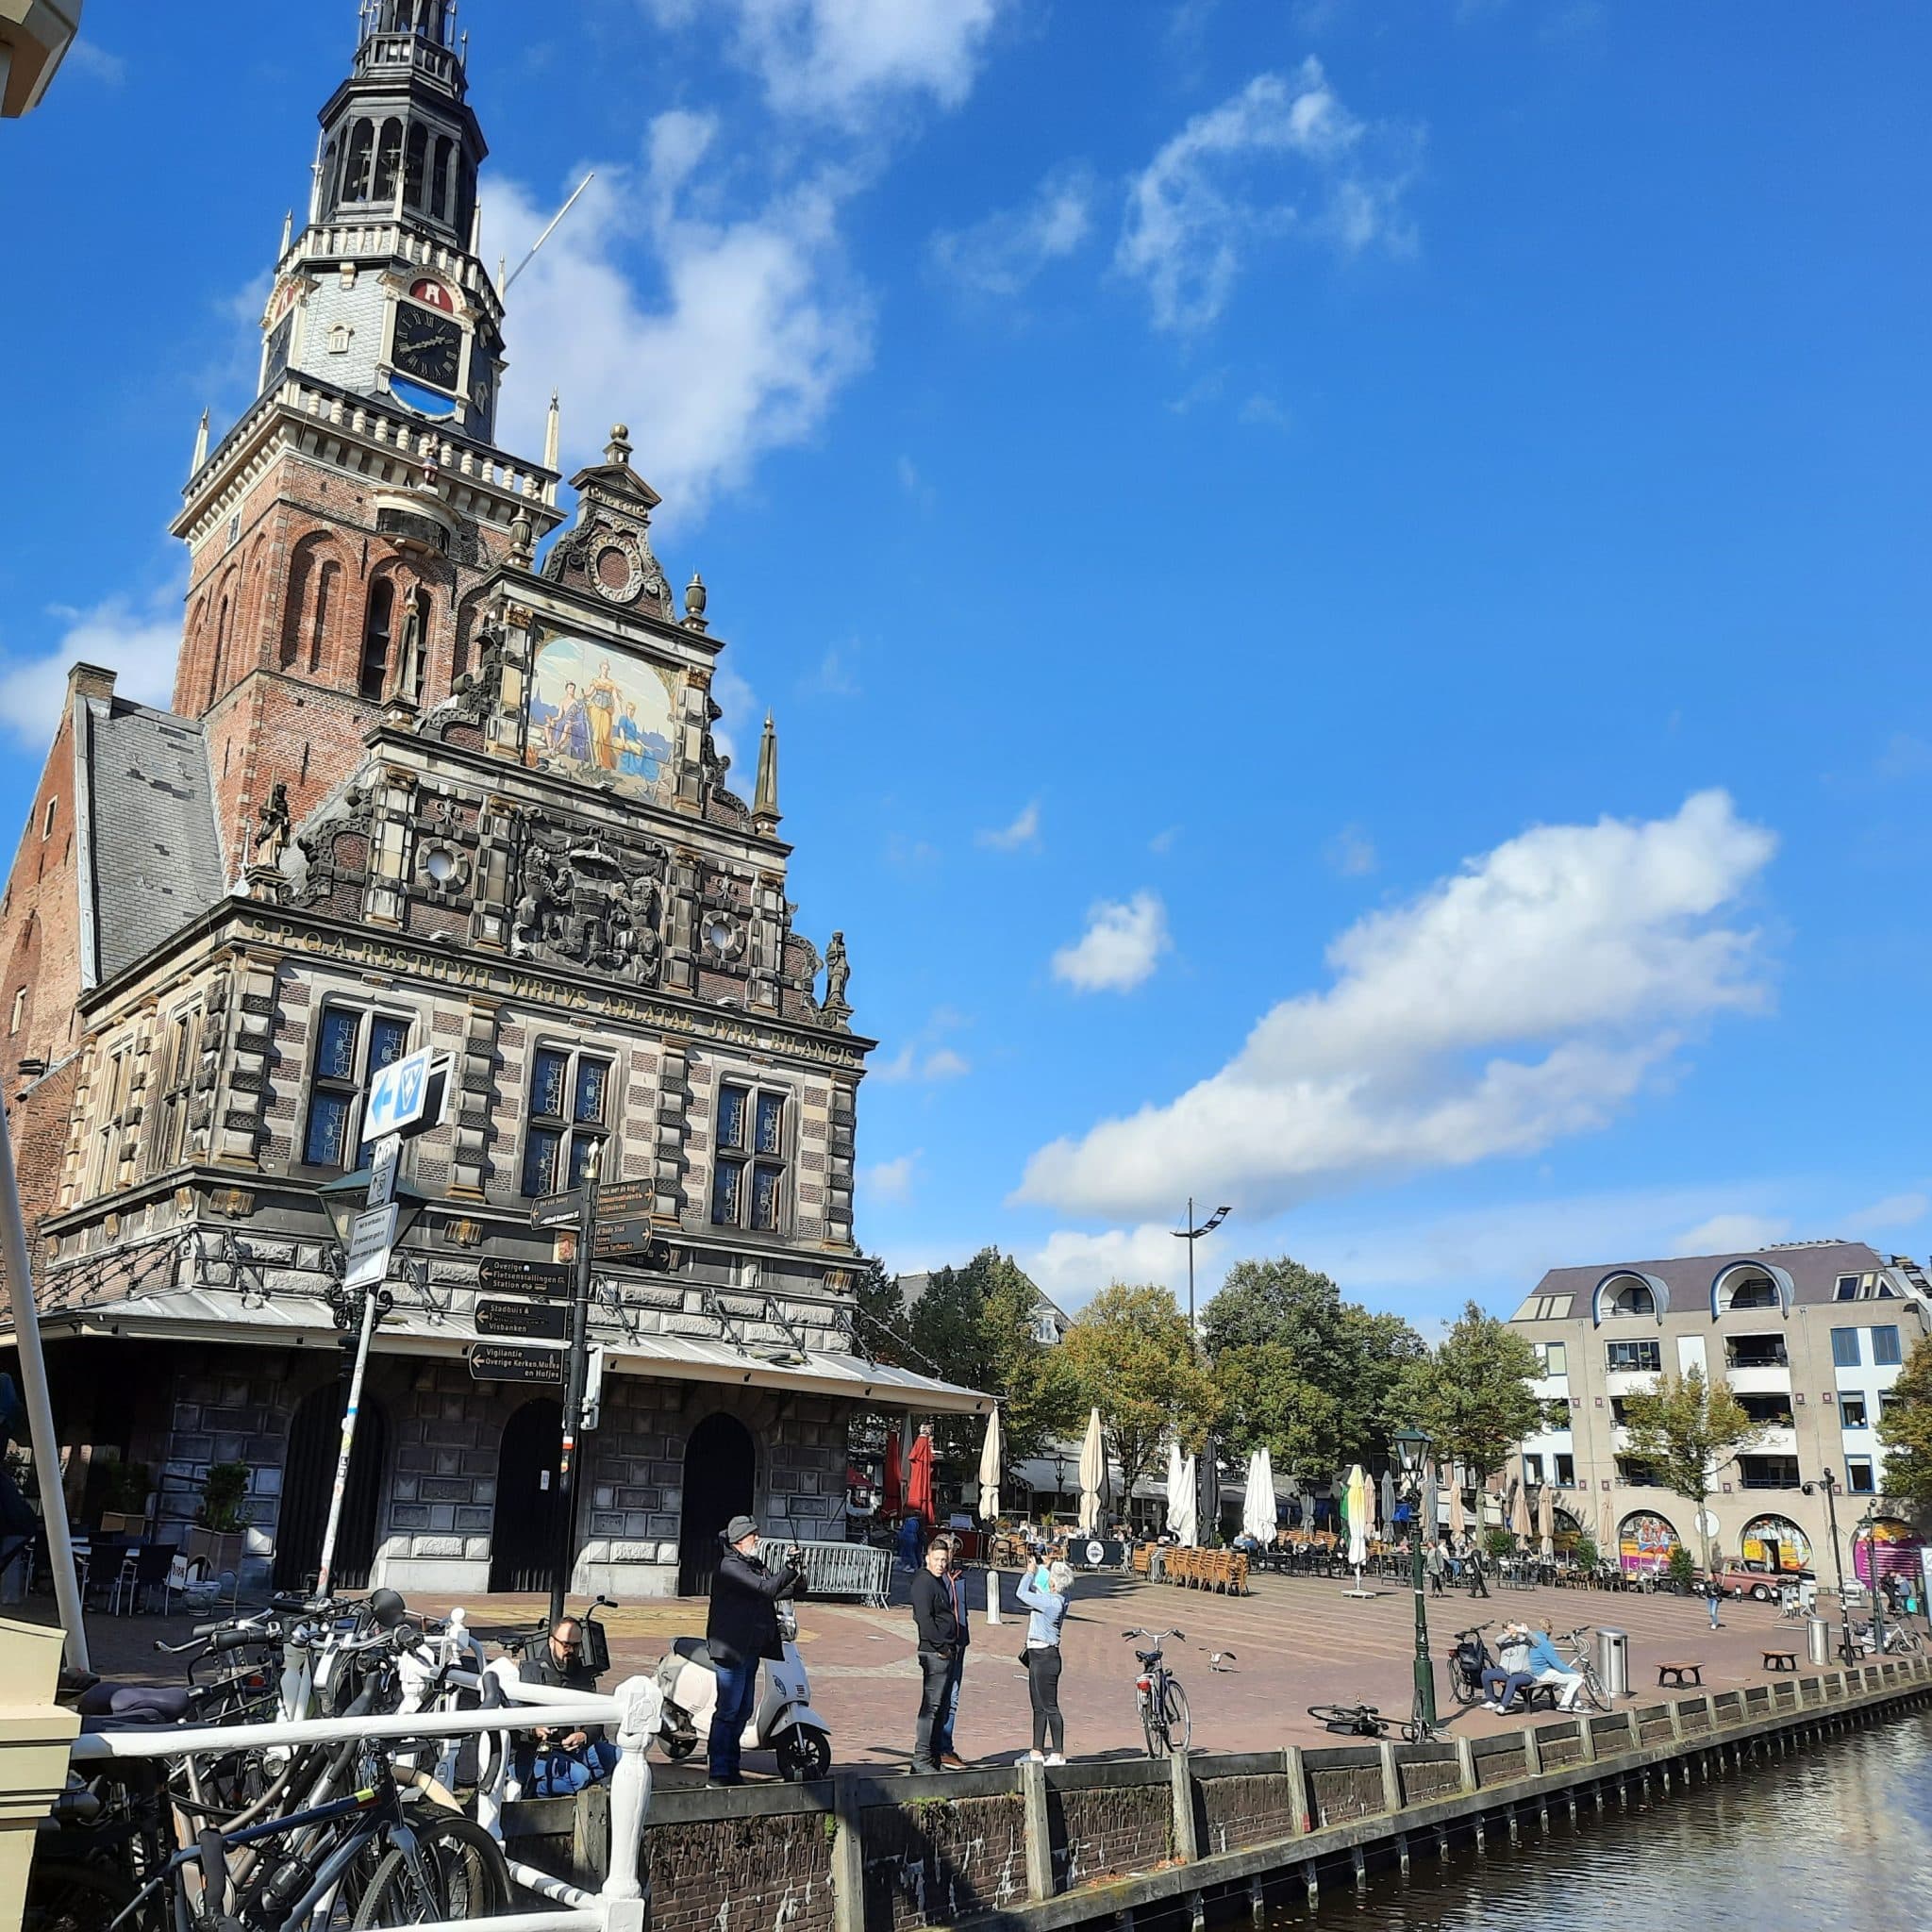 Travel guide: Alkmaar, the Netherlands